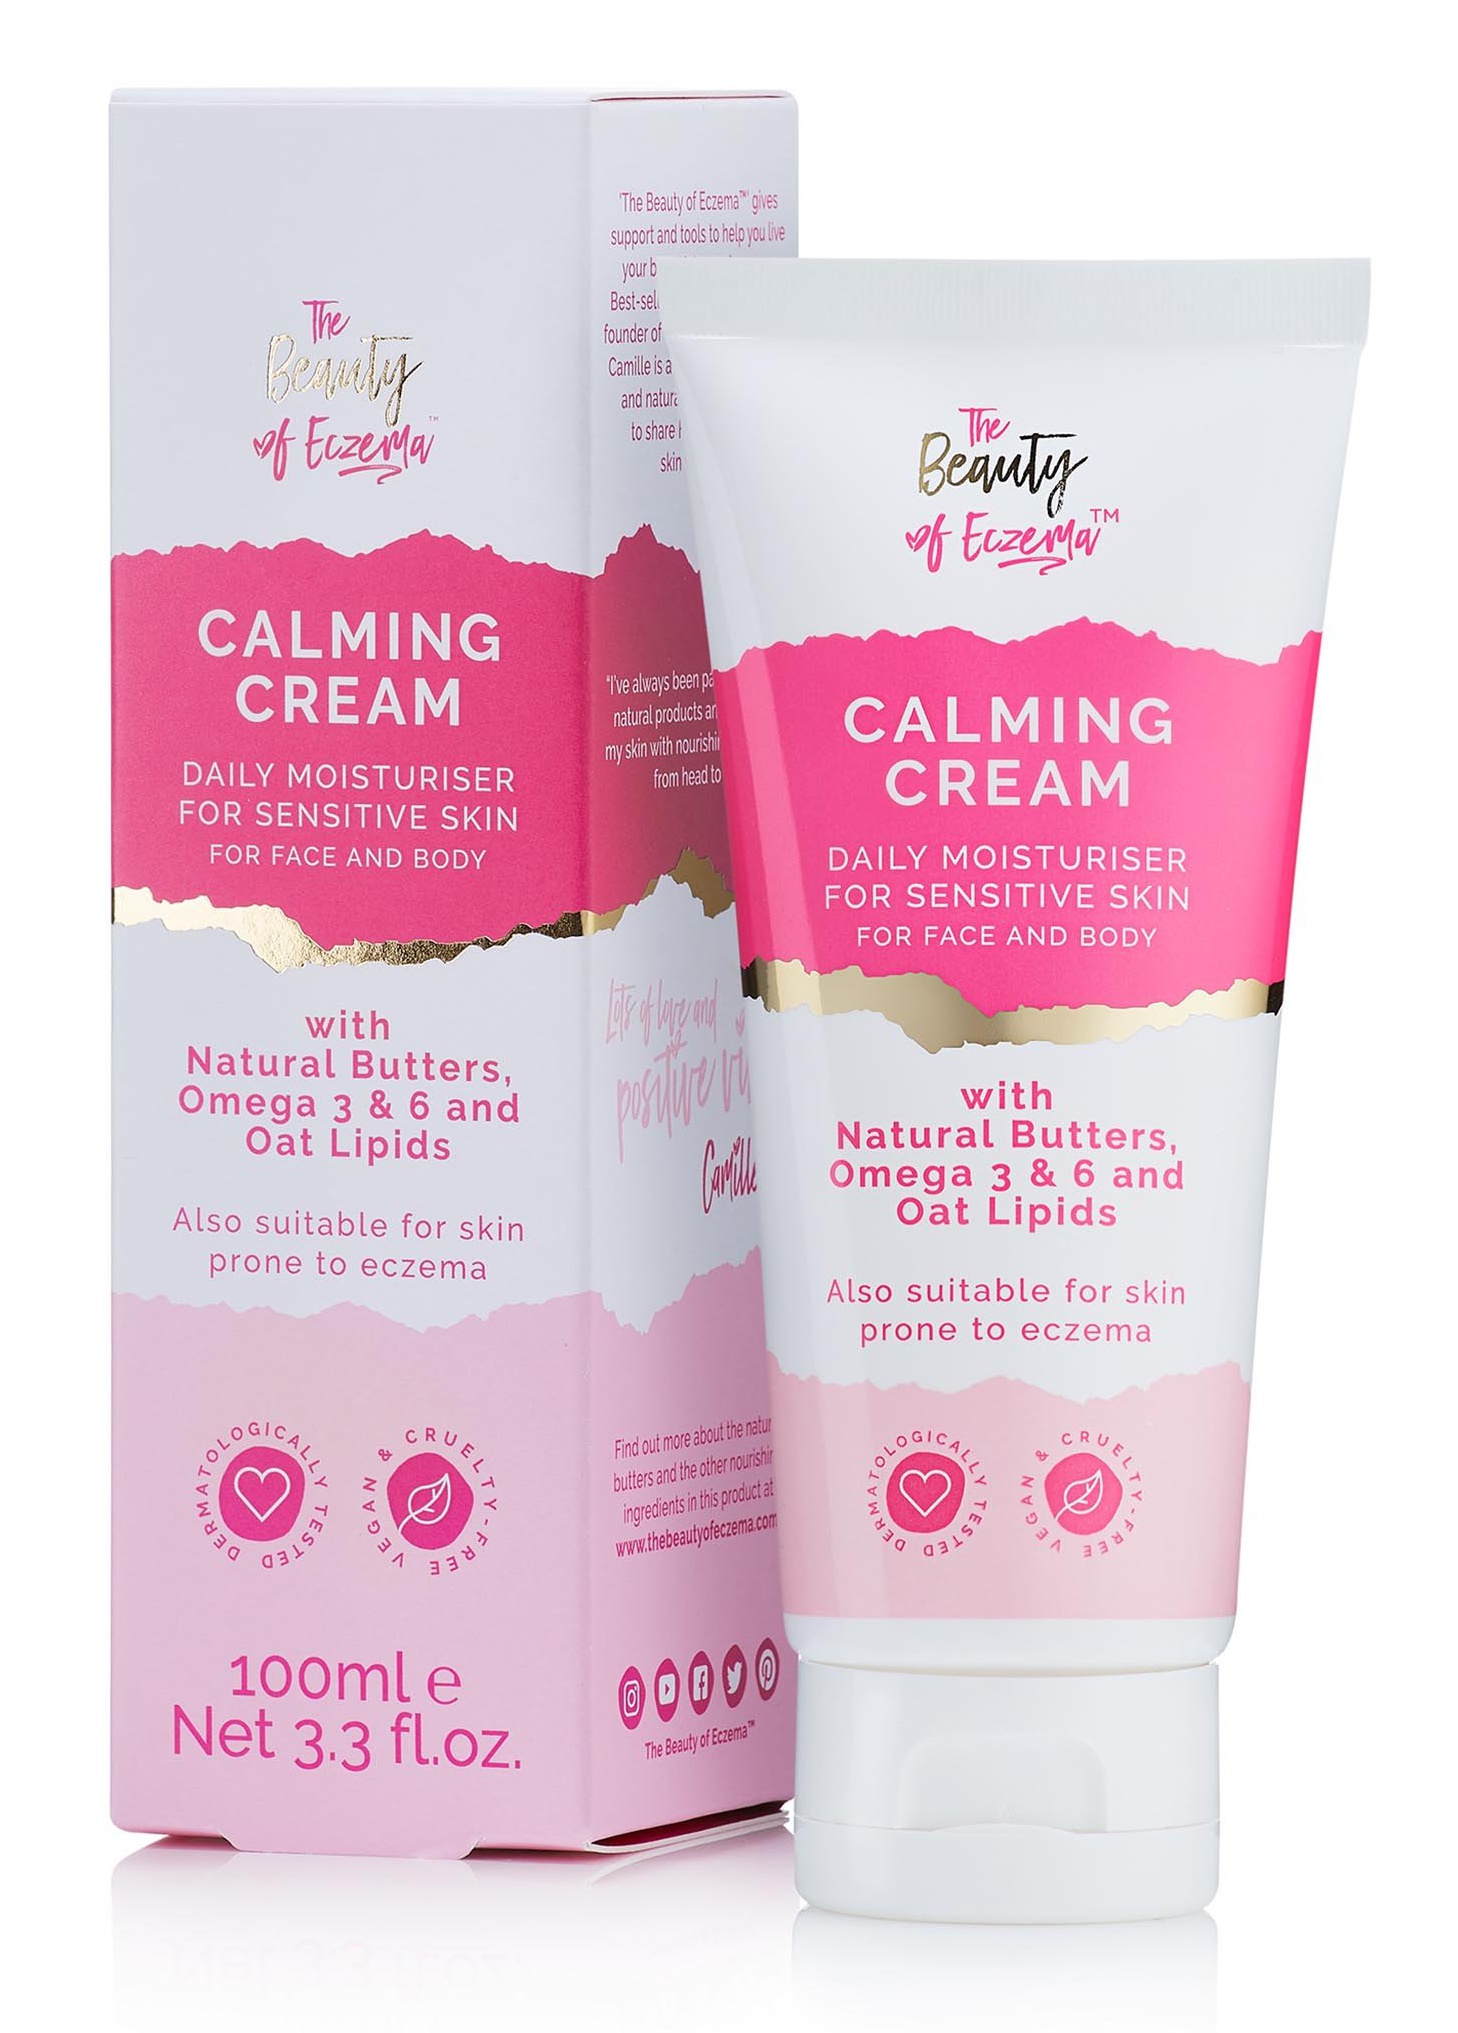 The Beauty of Eczema Calming Cream